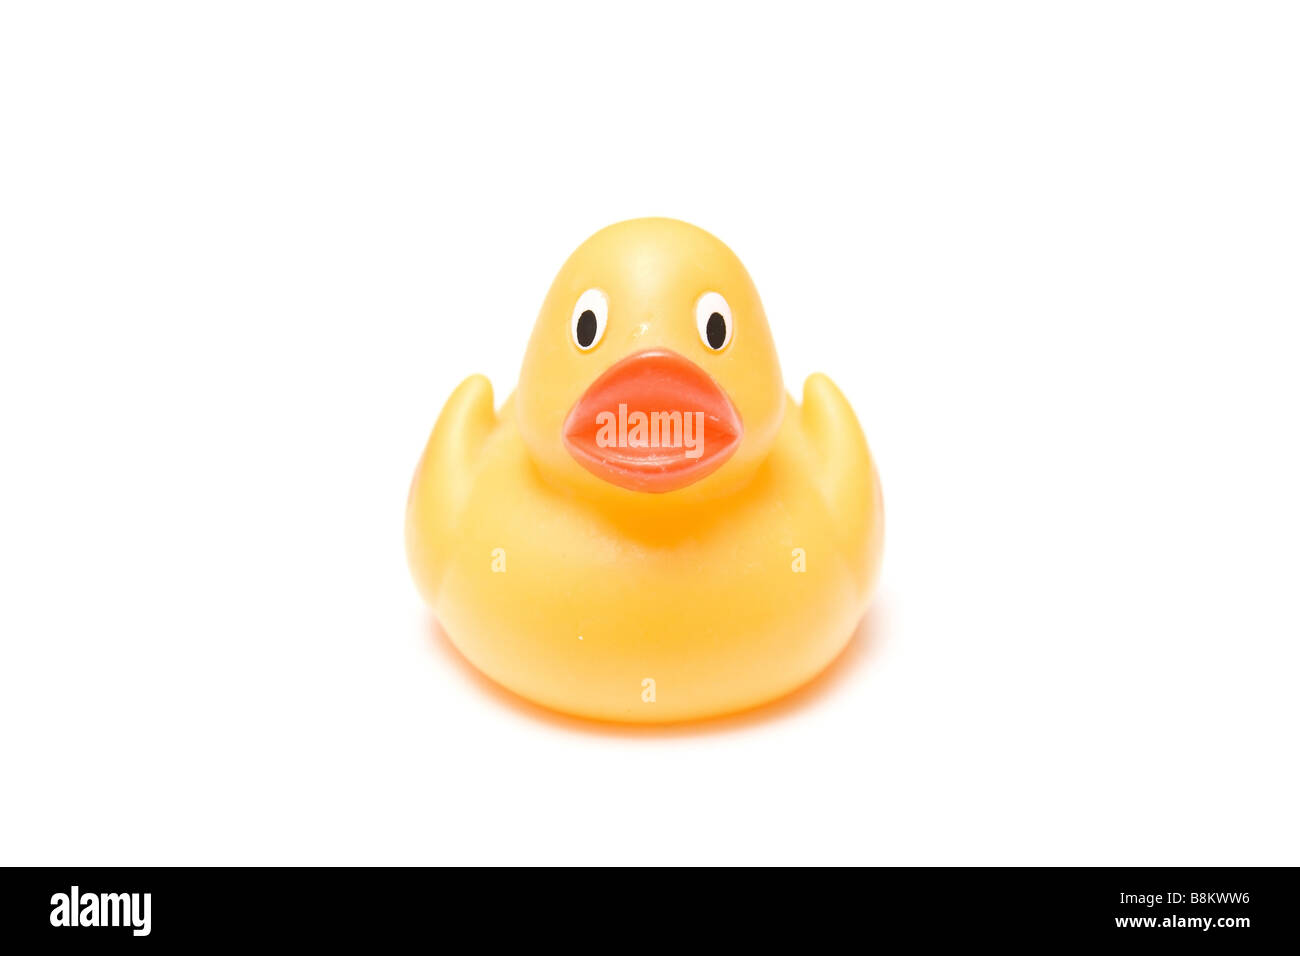 Rubber duck rubber duck -Fotos und -Bildmaterial in hoher